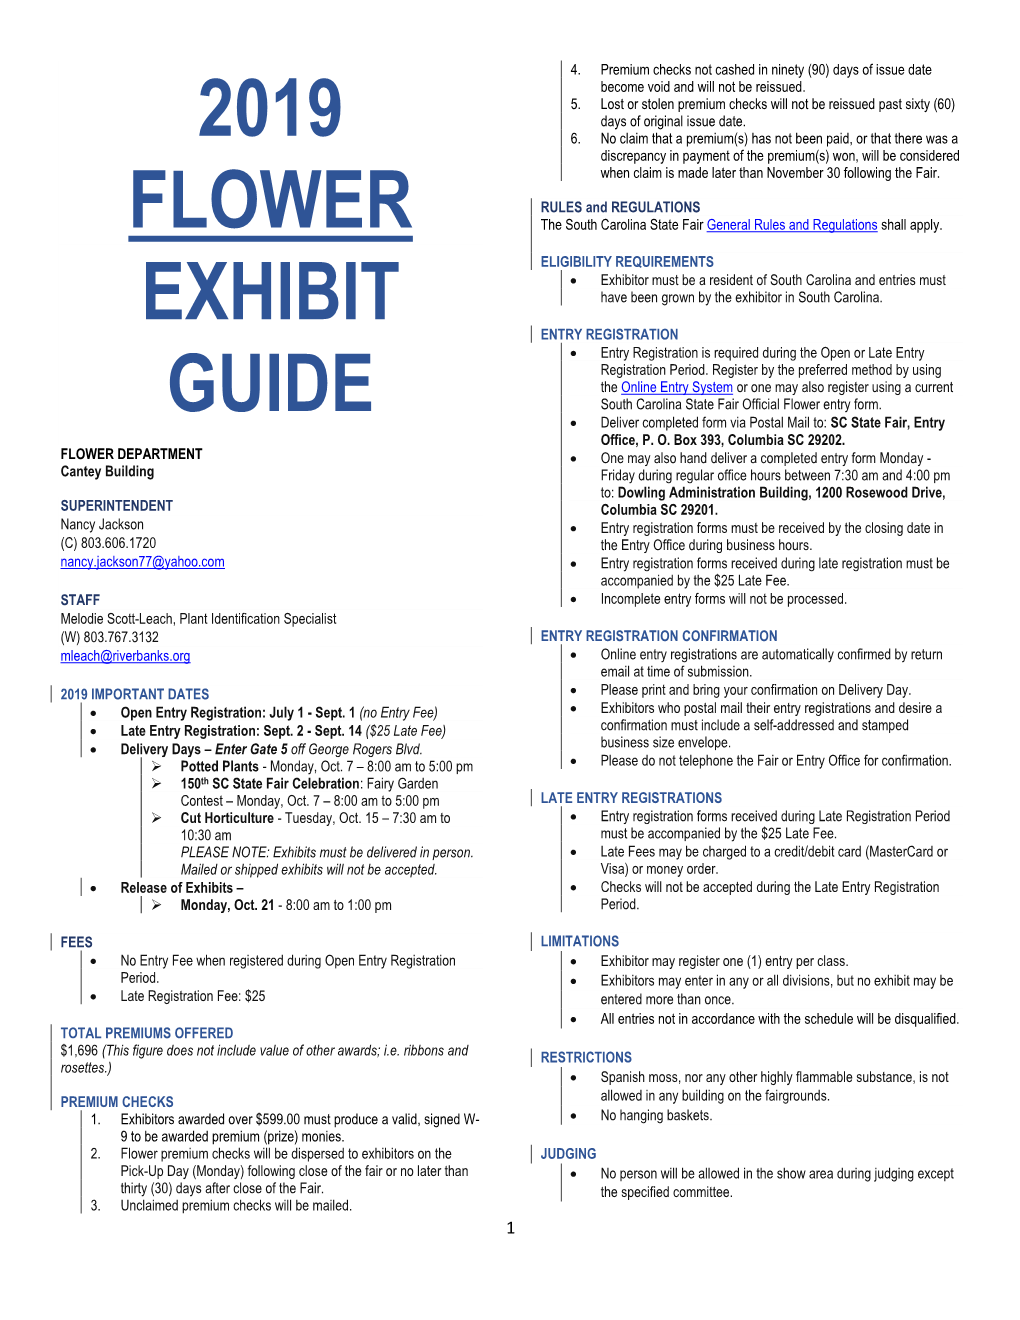 2019 Flower Exhibit Guide